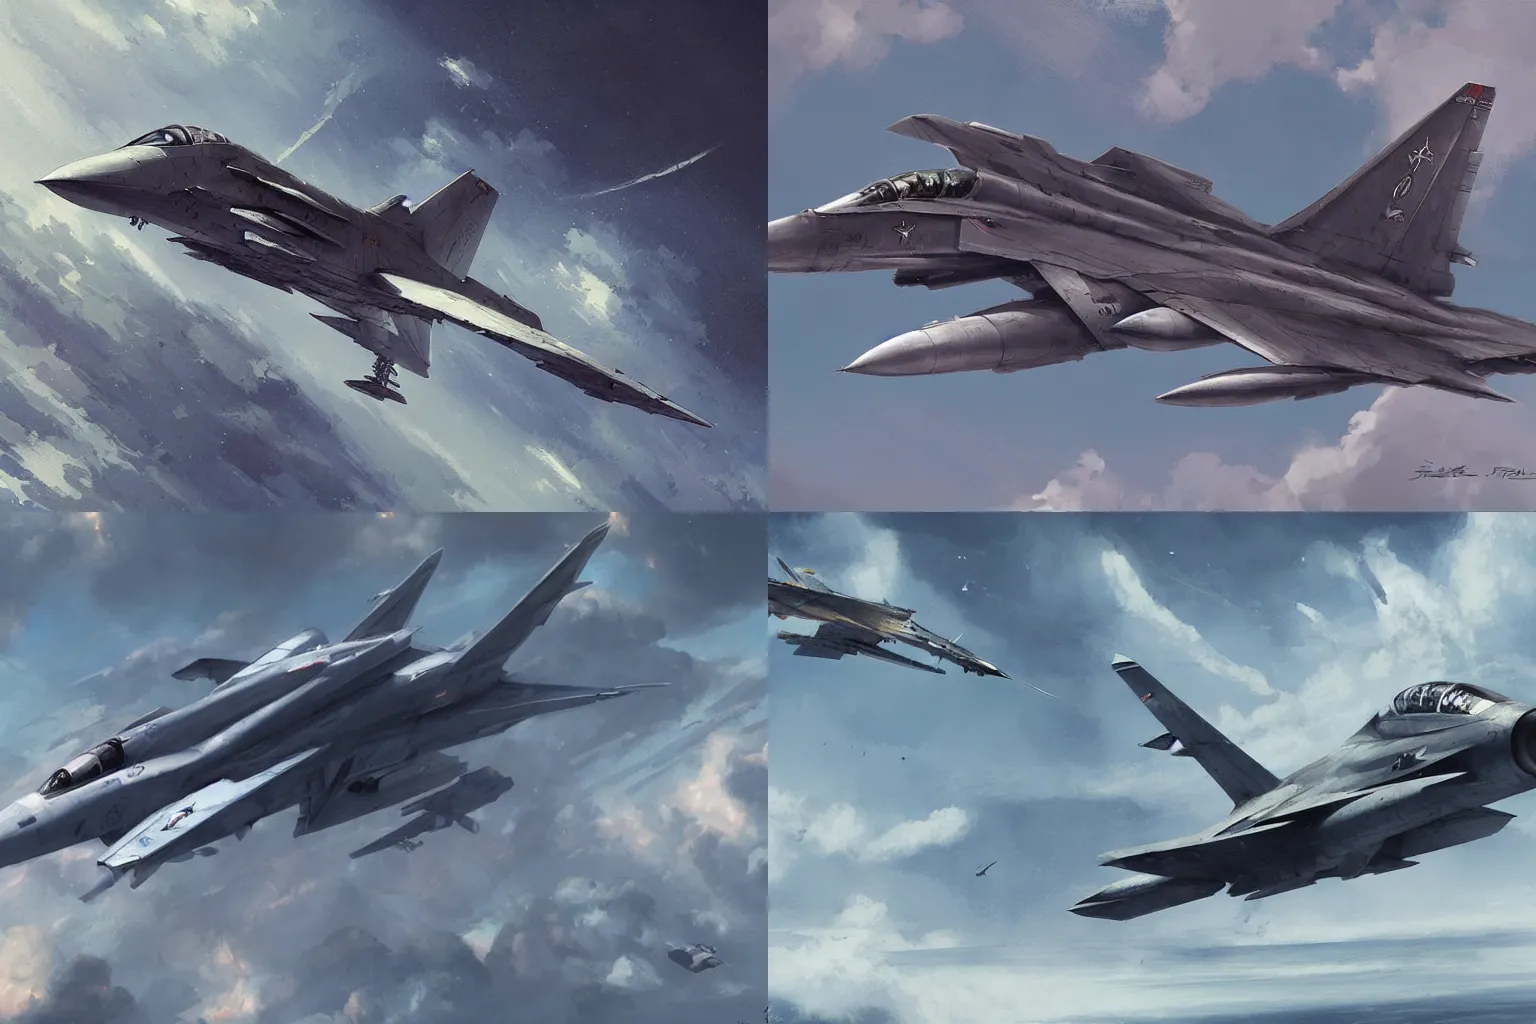 Prompt: iconic fighter jet plane by shoji kawamori, top secret space plane, tomcat raptor hornet falcon, style of greg rutkowski, style of john kenn mortensen